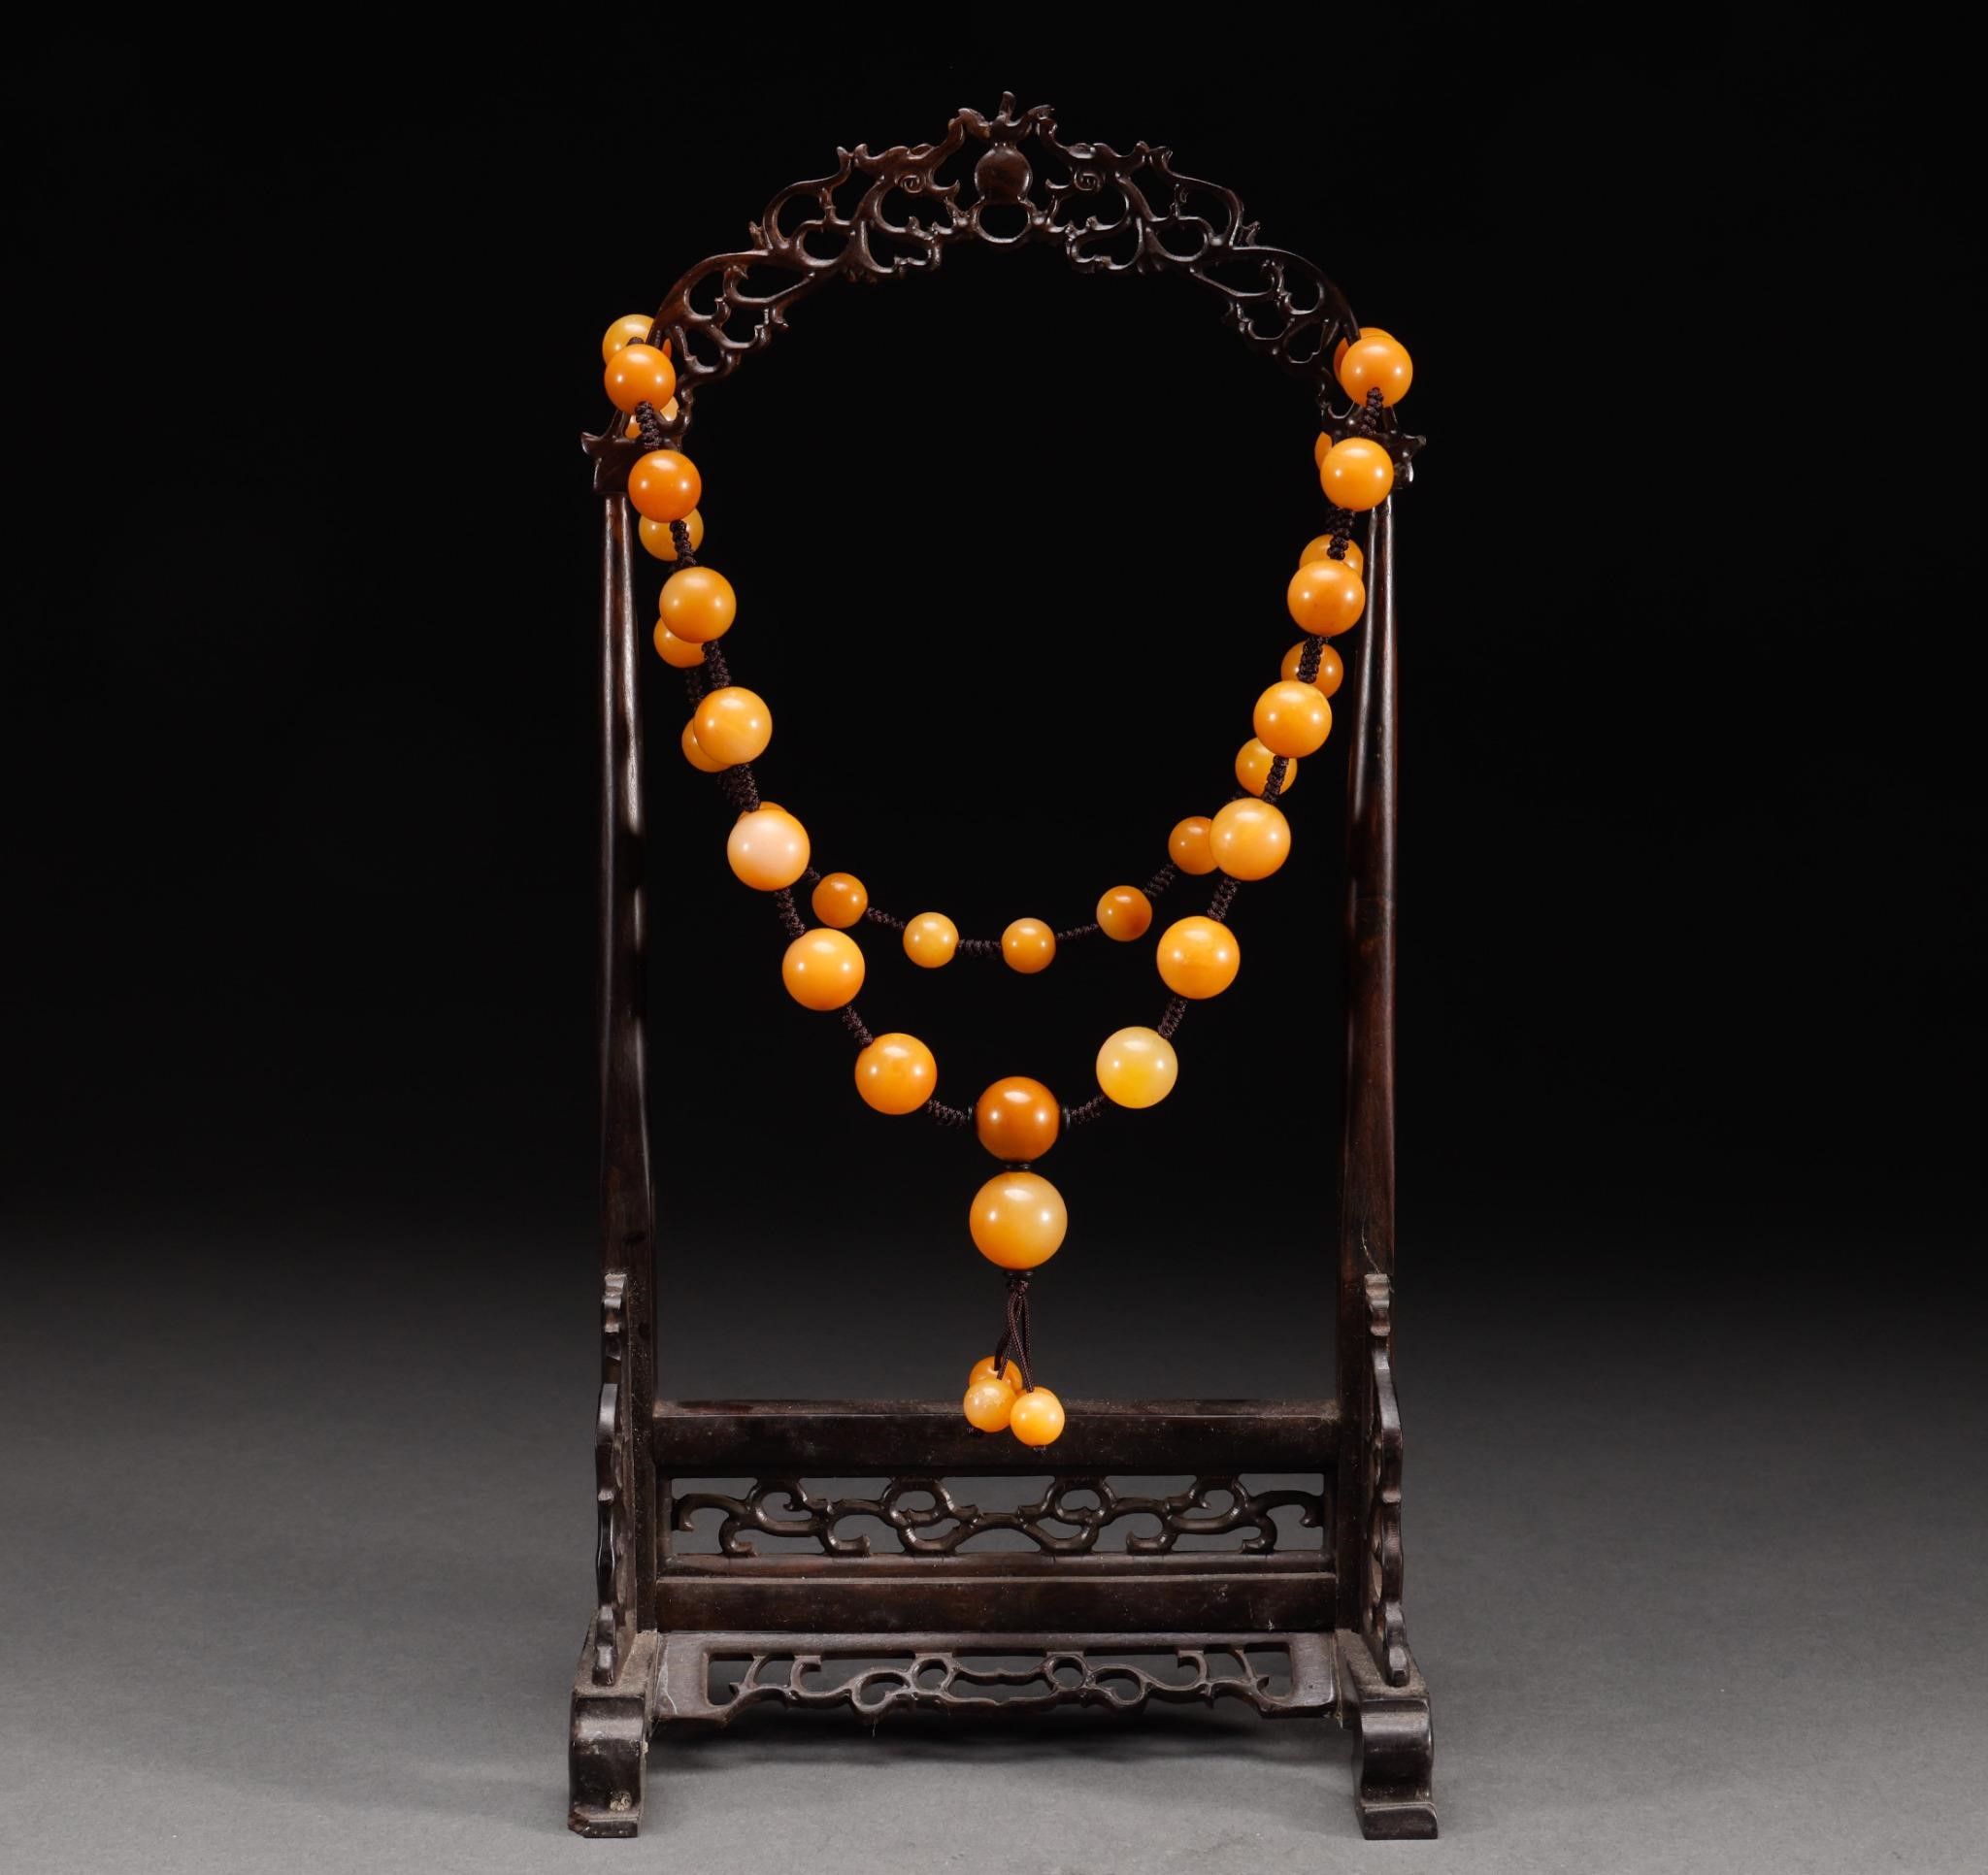 Tian Huangshi necklace of Qing Dynasty